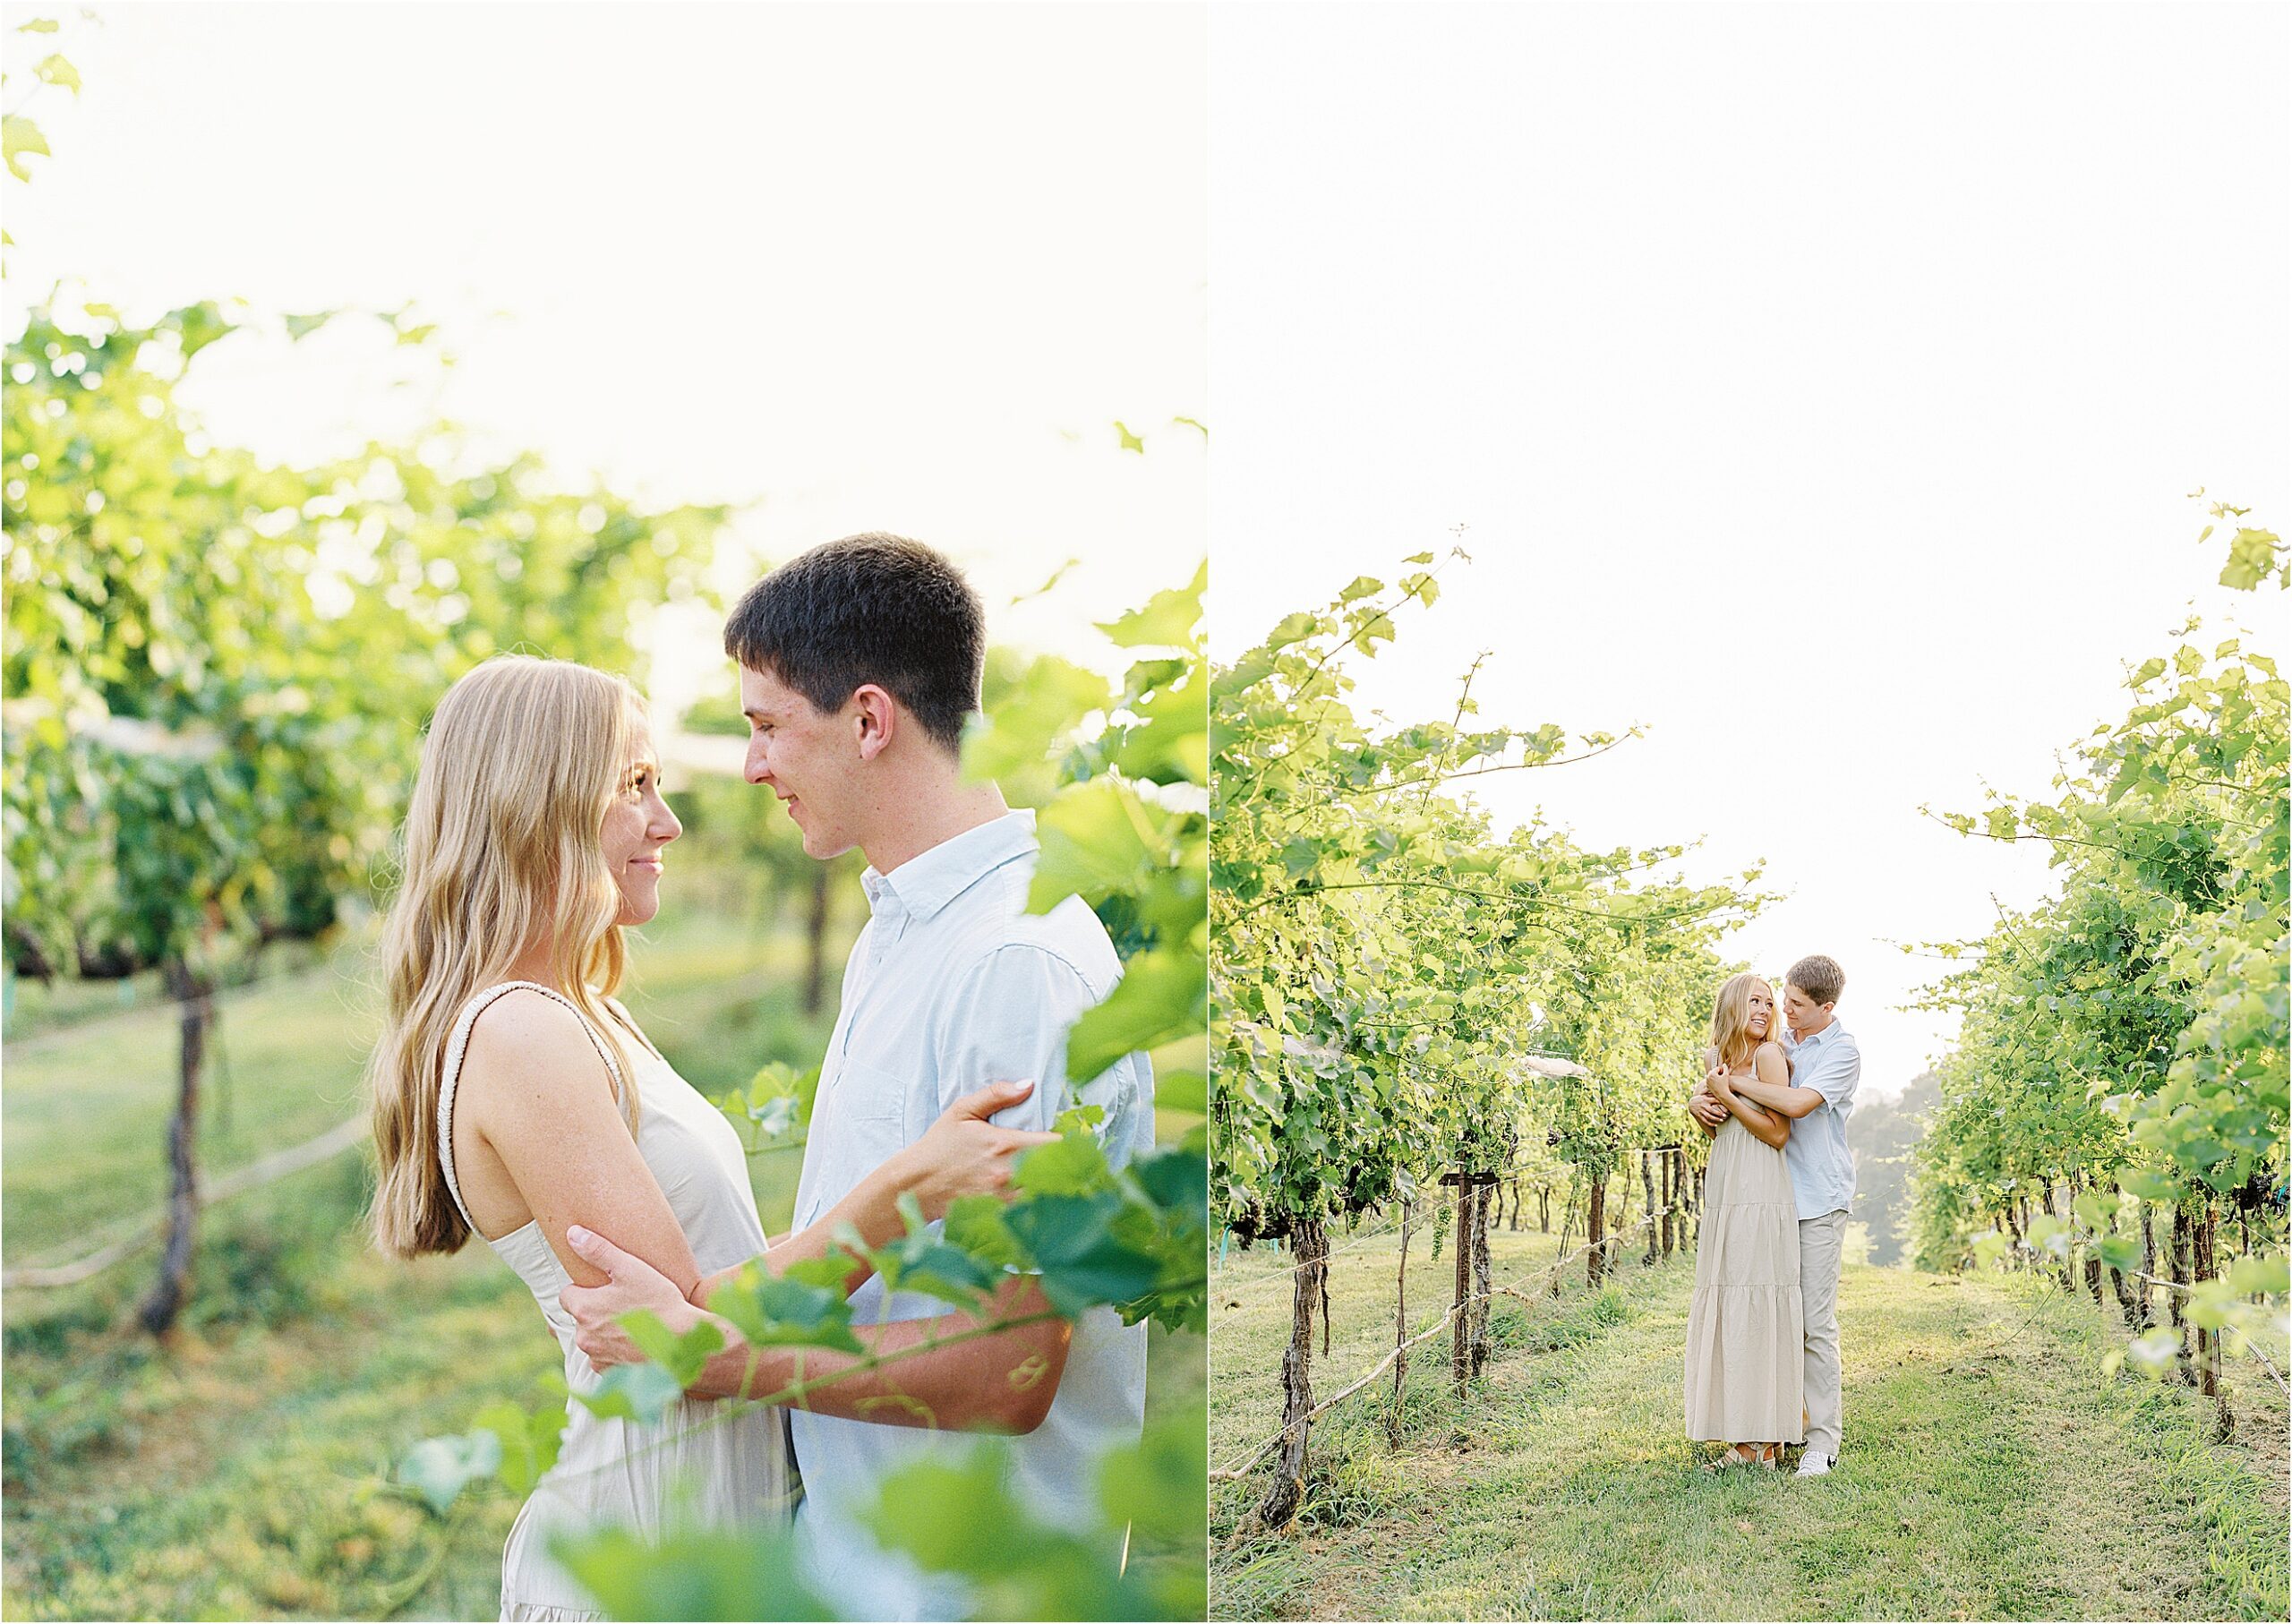 Rachel-Linder-Photography-montaluce-winery-engagement-photos_0015.jpg